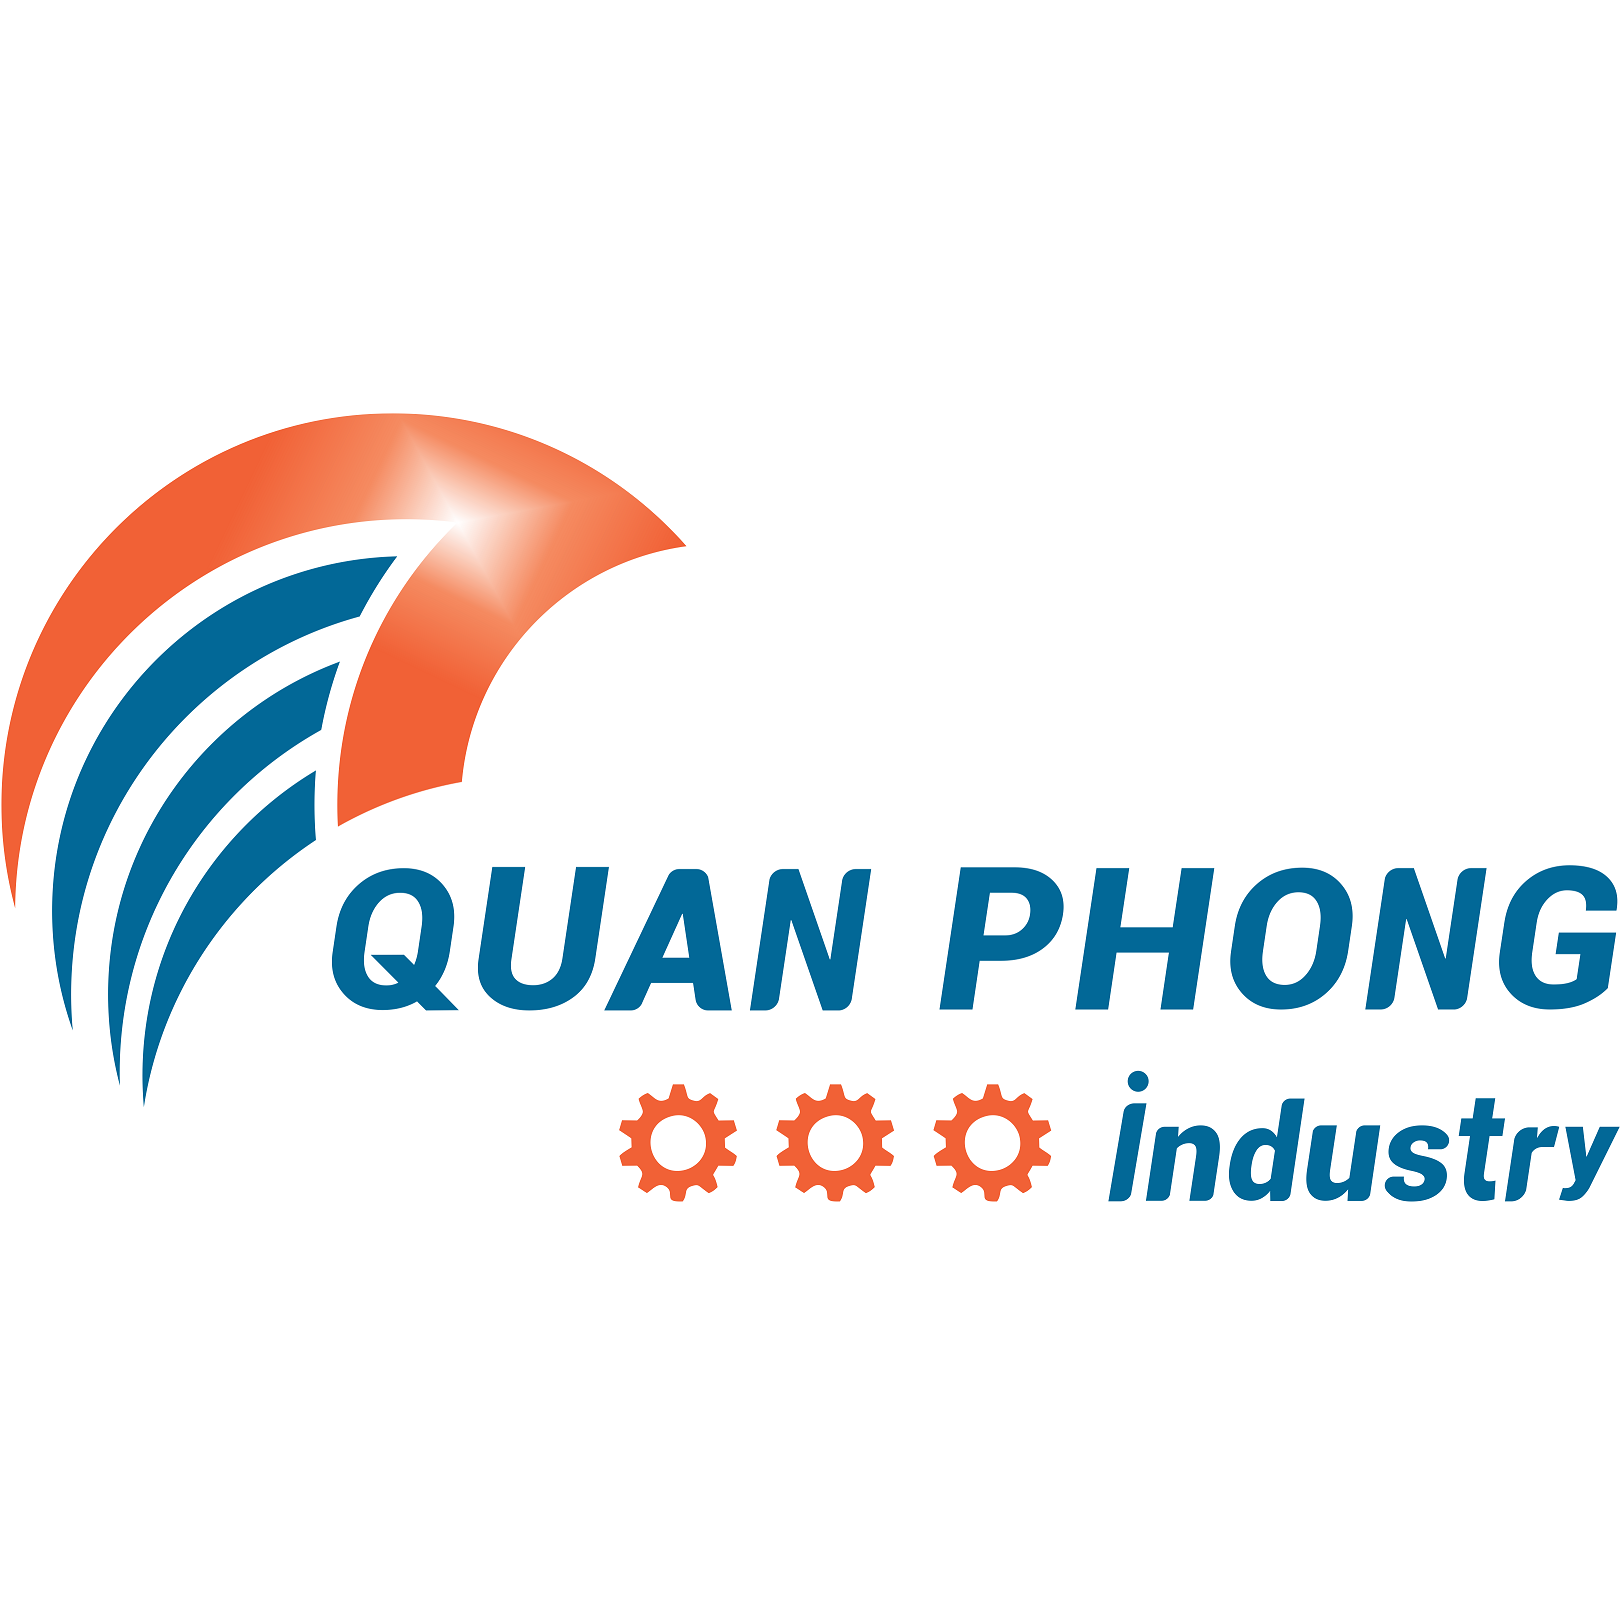 Quan Phong Industry logo